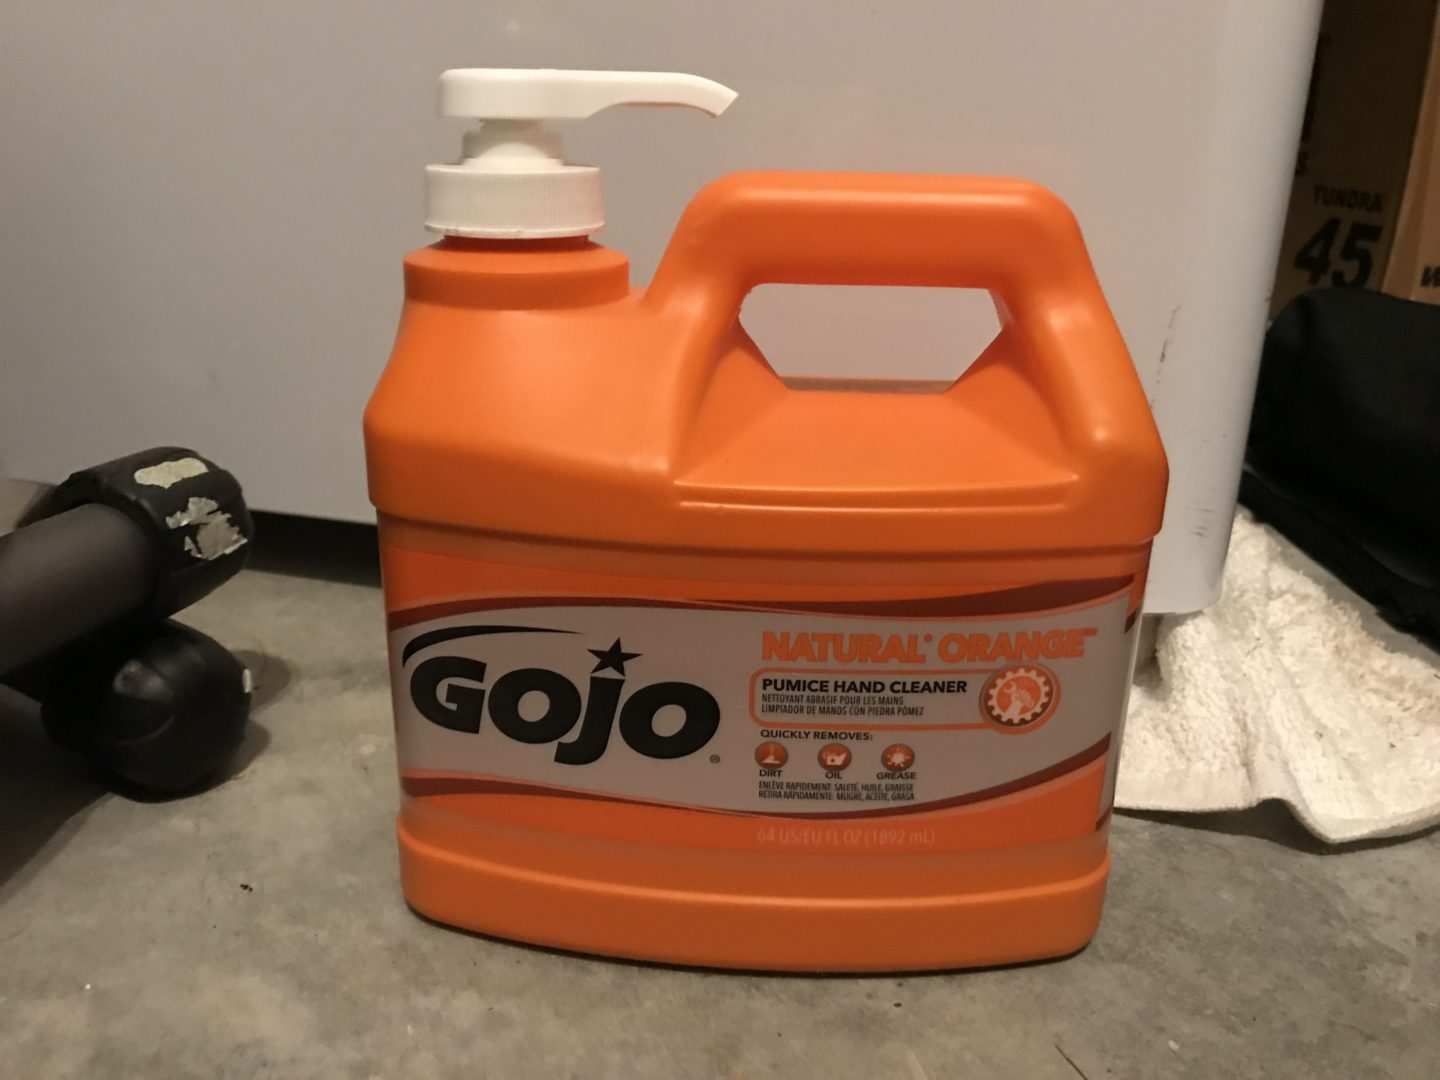 Fast Orange With Pumice Gallon